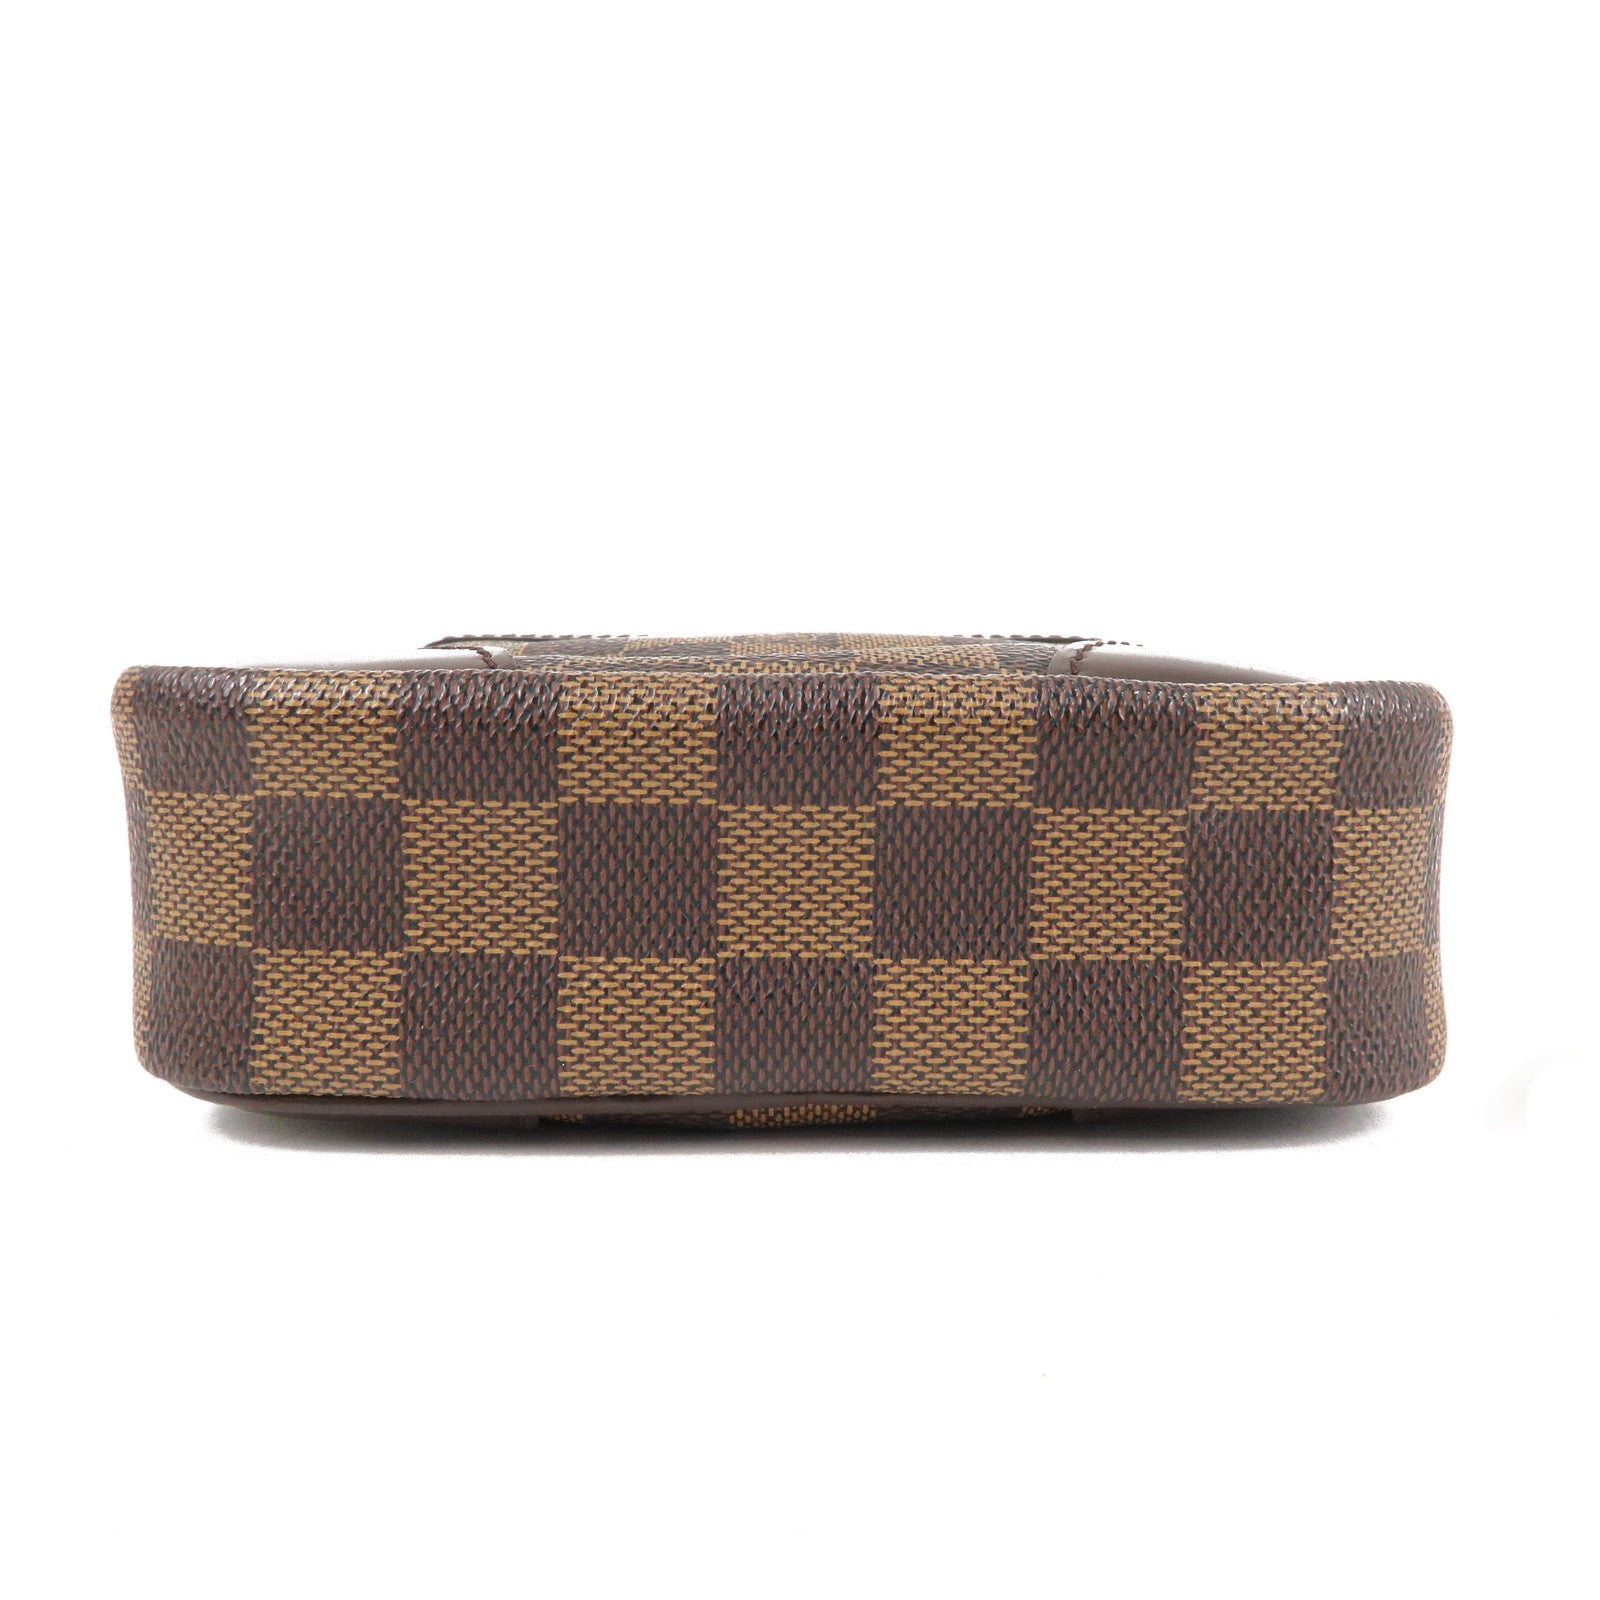 Louis+Vuitton+Danube+Shoulder+Bag+Brown+Leather for sale online